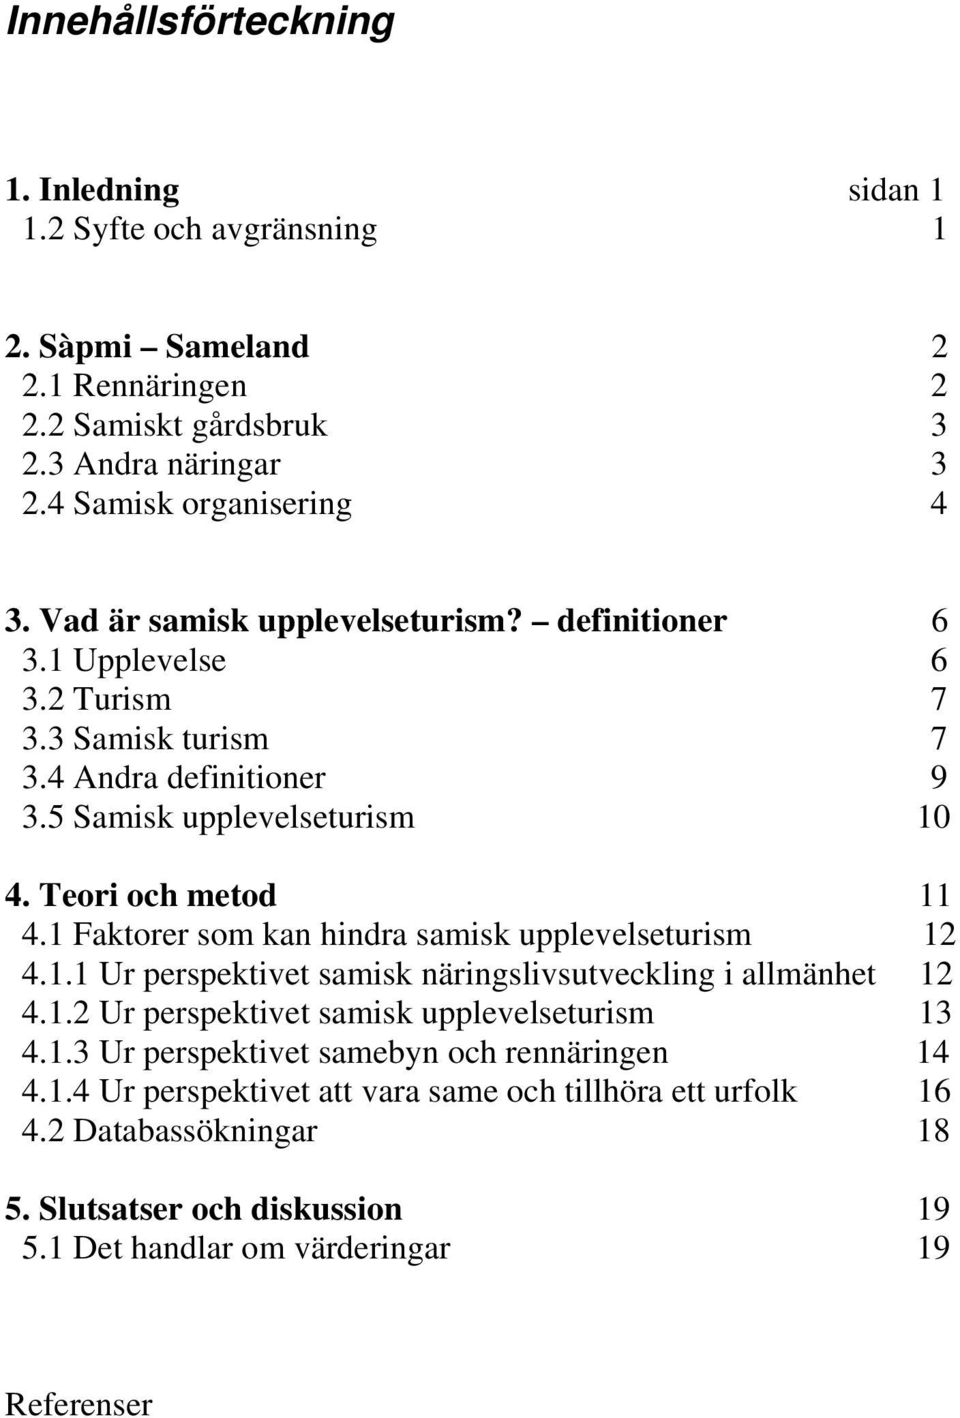 1 Faktorer som kan hindra samisk upplevelseturism 12 4.1.1 Ur perspektivet samisk näringslivsutveckling i allmänhet 12 4.1.2 Ur perspektivet samisk upplevelseturism 13 4.1.3 Ur perspektivet samebyn och rennäringen 14 4.